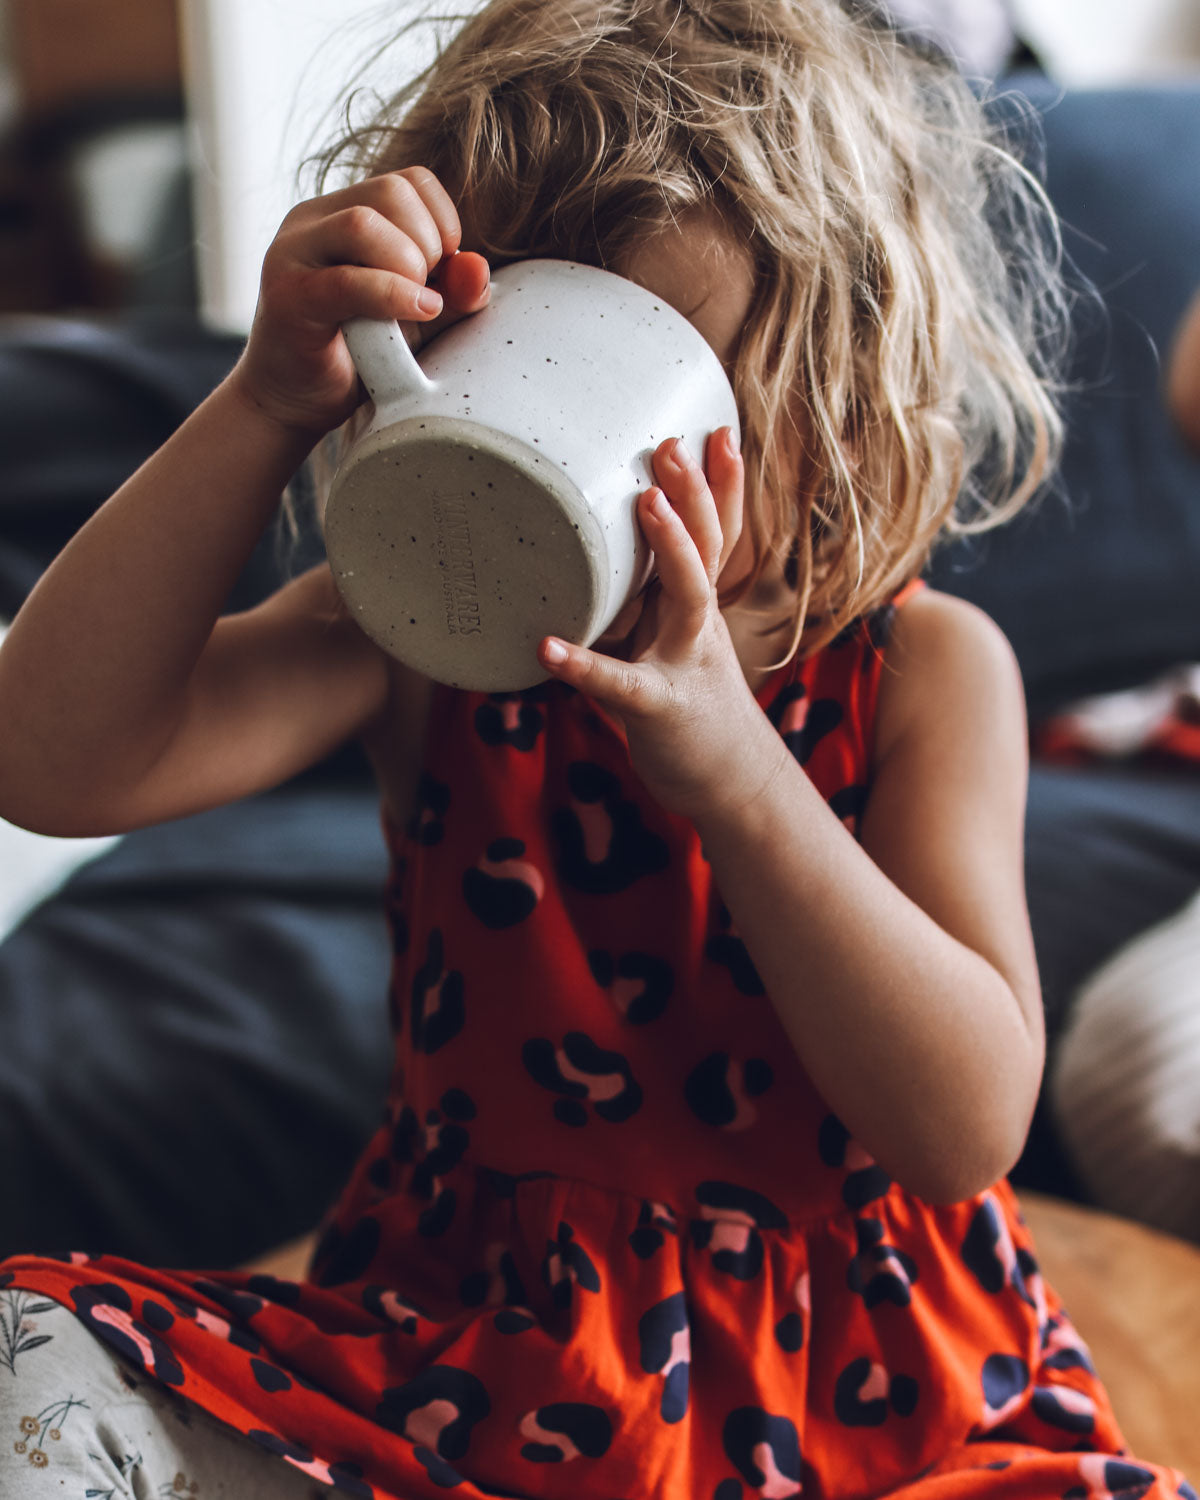 Young girl drinking milk from a handmade mug